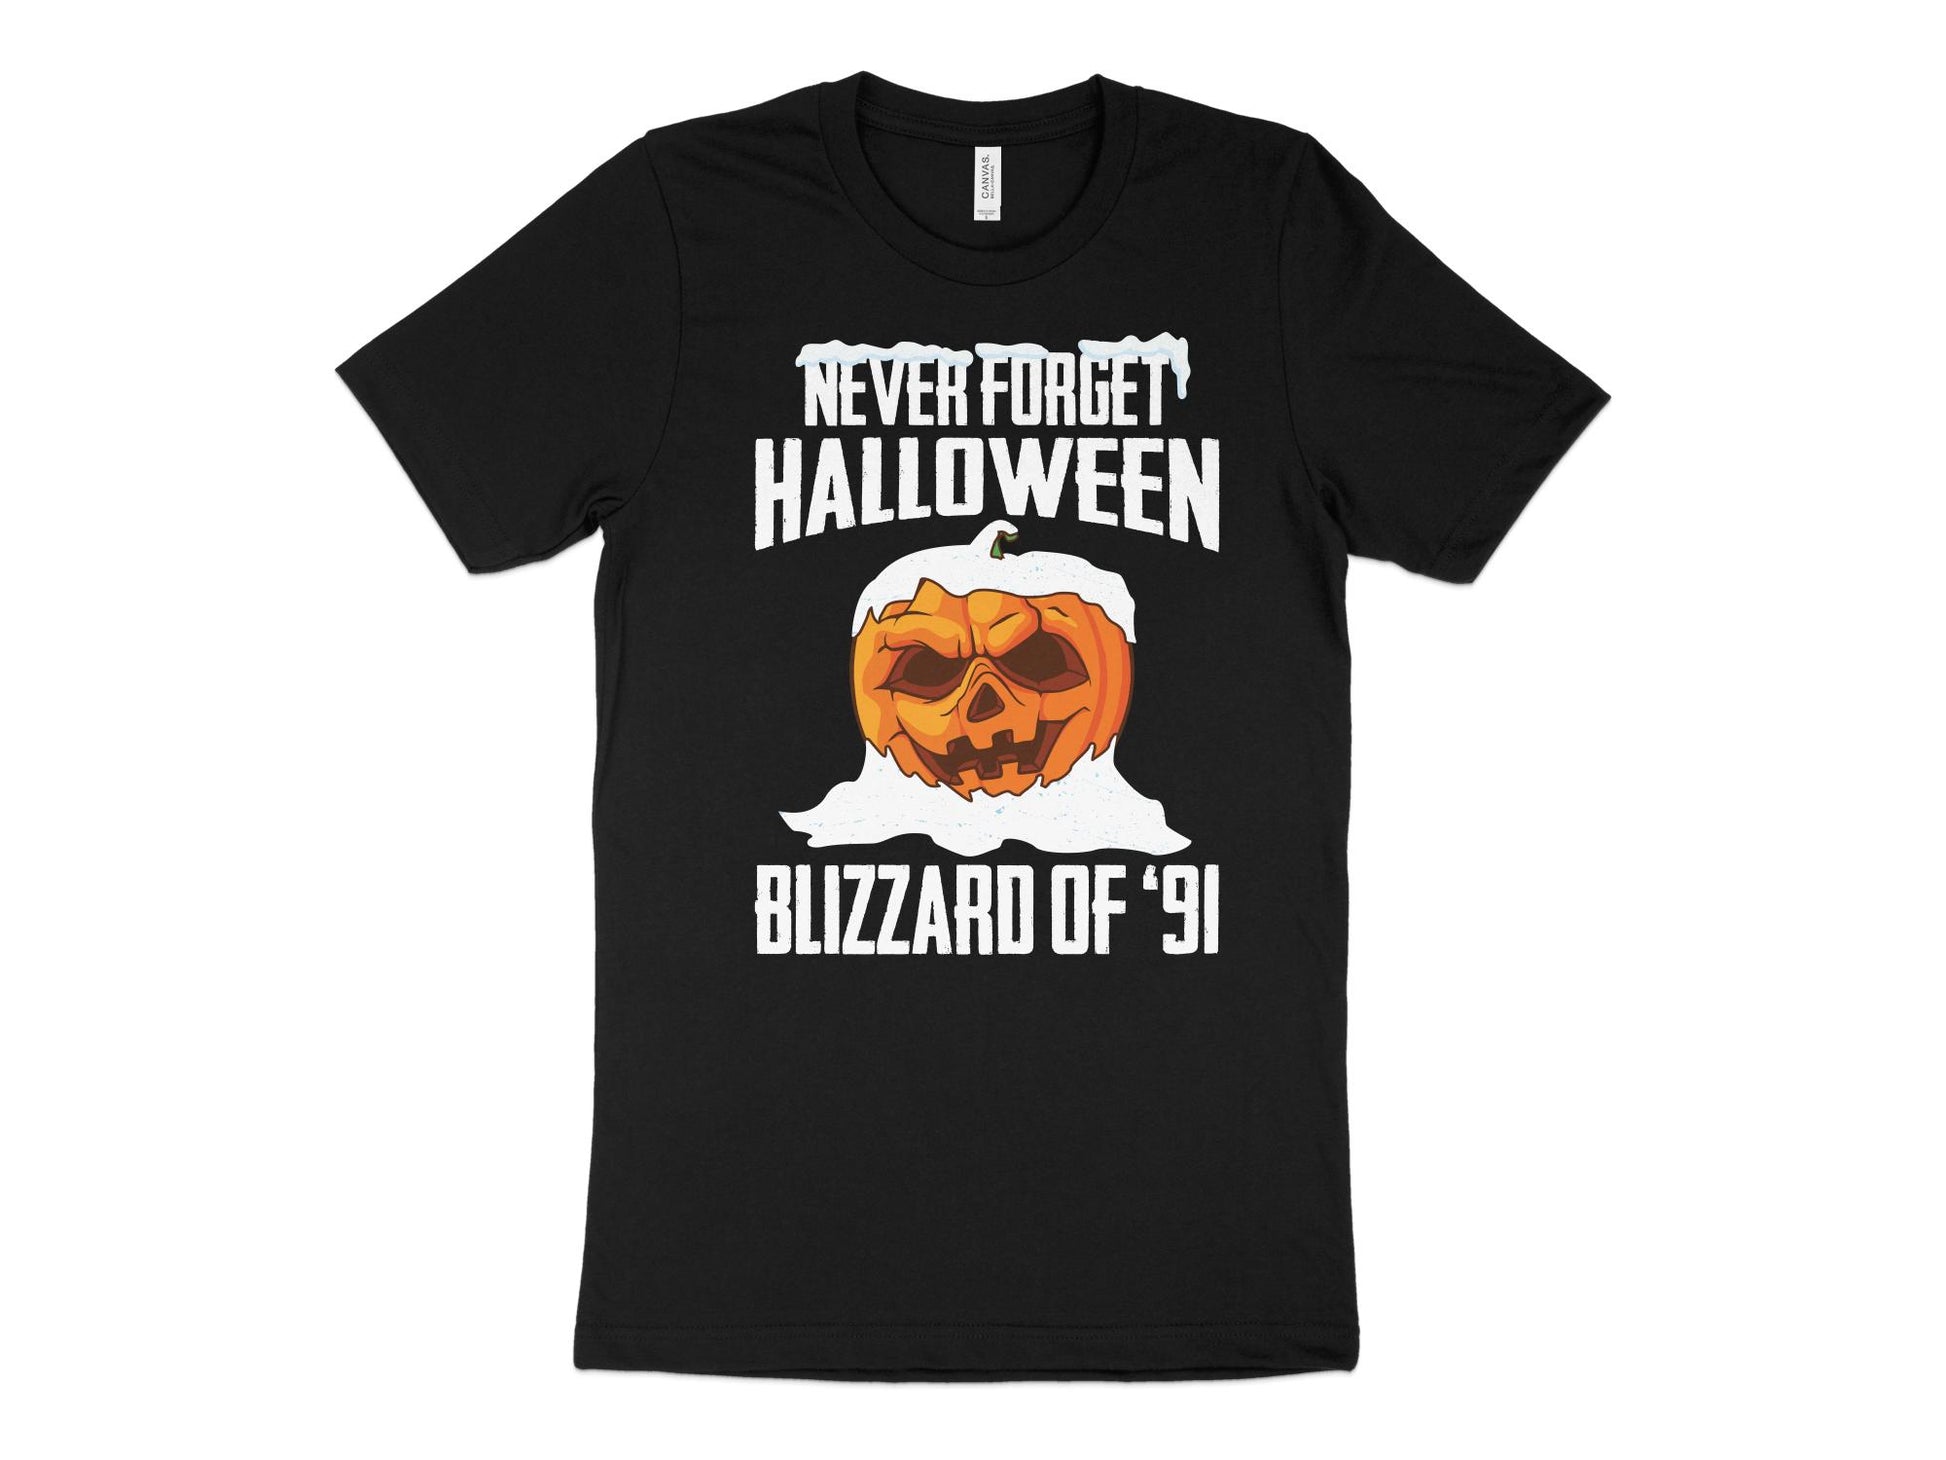 Minnesota Blizzard Halloween 1991 Shirt, black